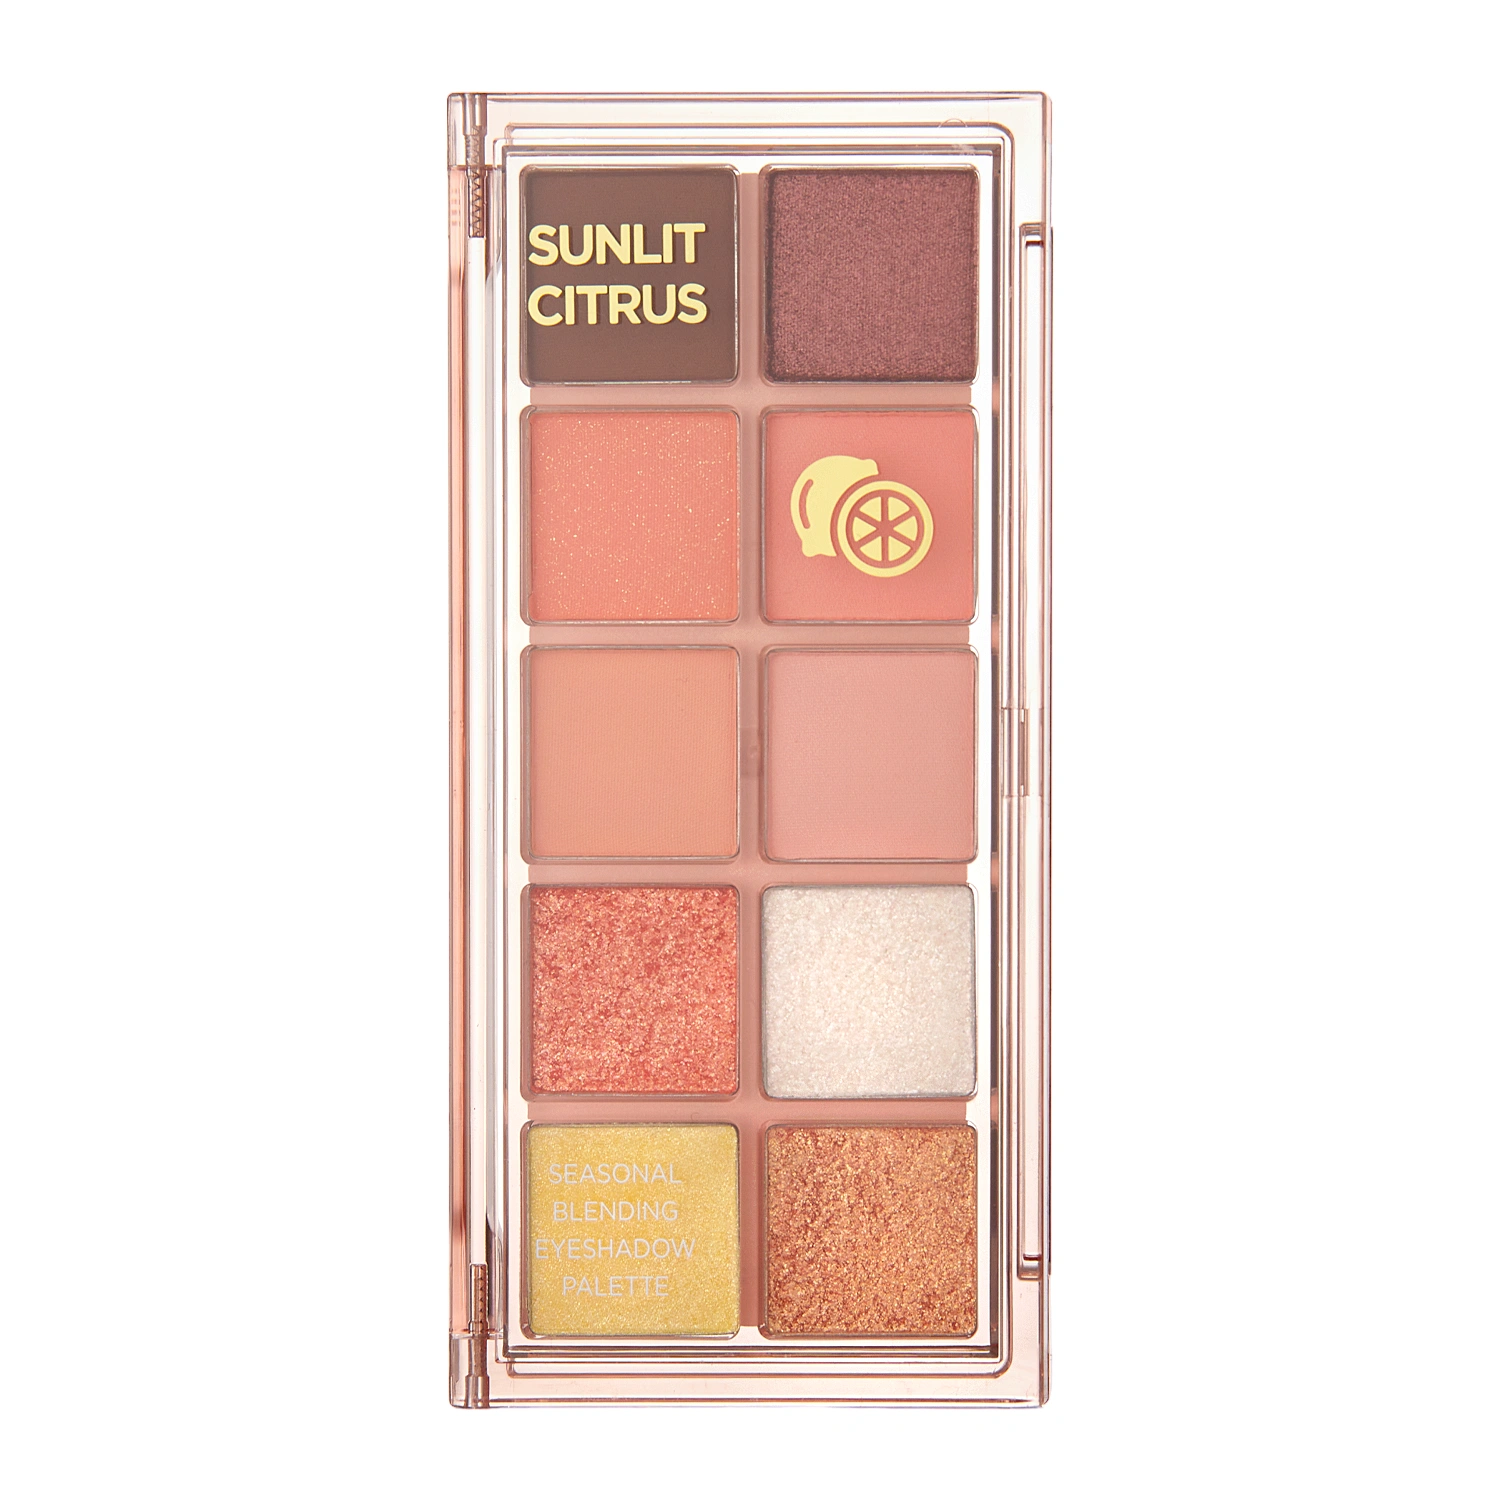 Peach C - Seasonal Blending Eyeshadow Palette - Палетка теней для век - 04 Sunlit Citrus - 7,5g